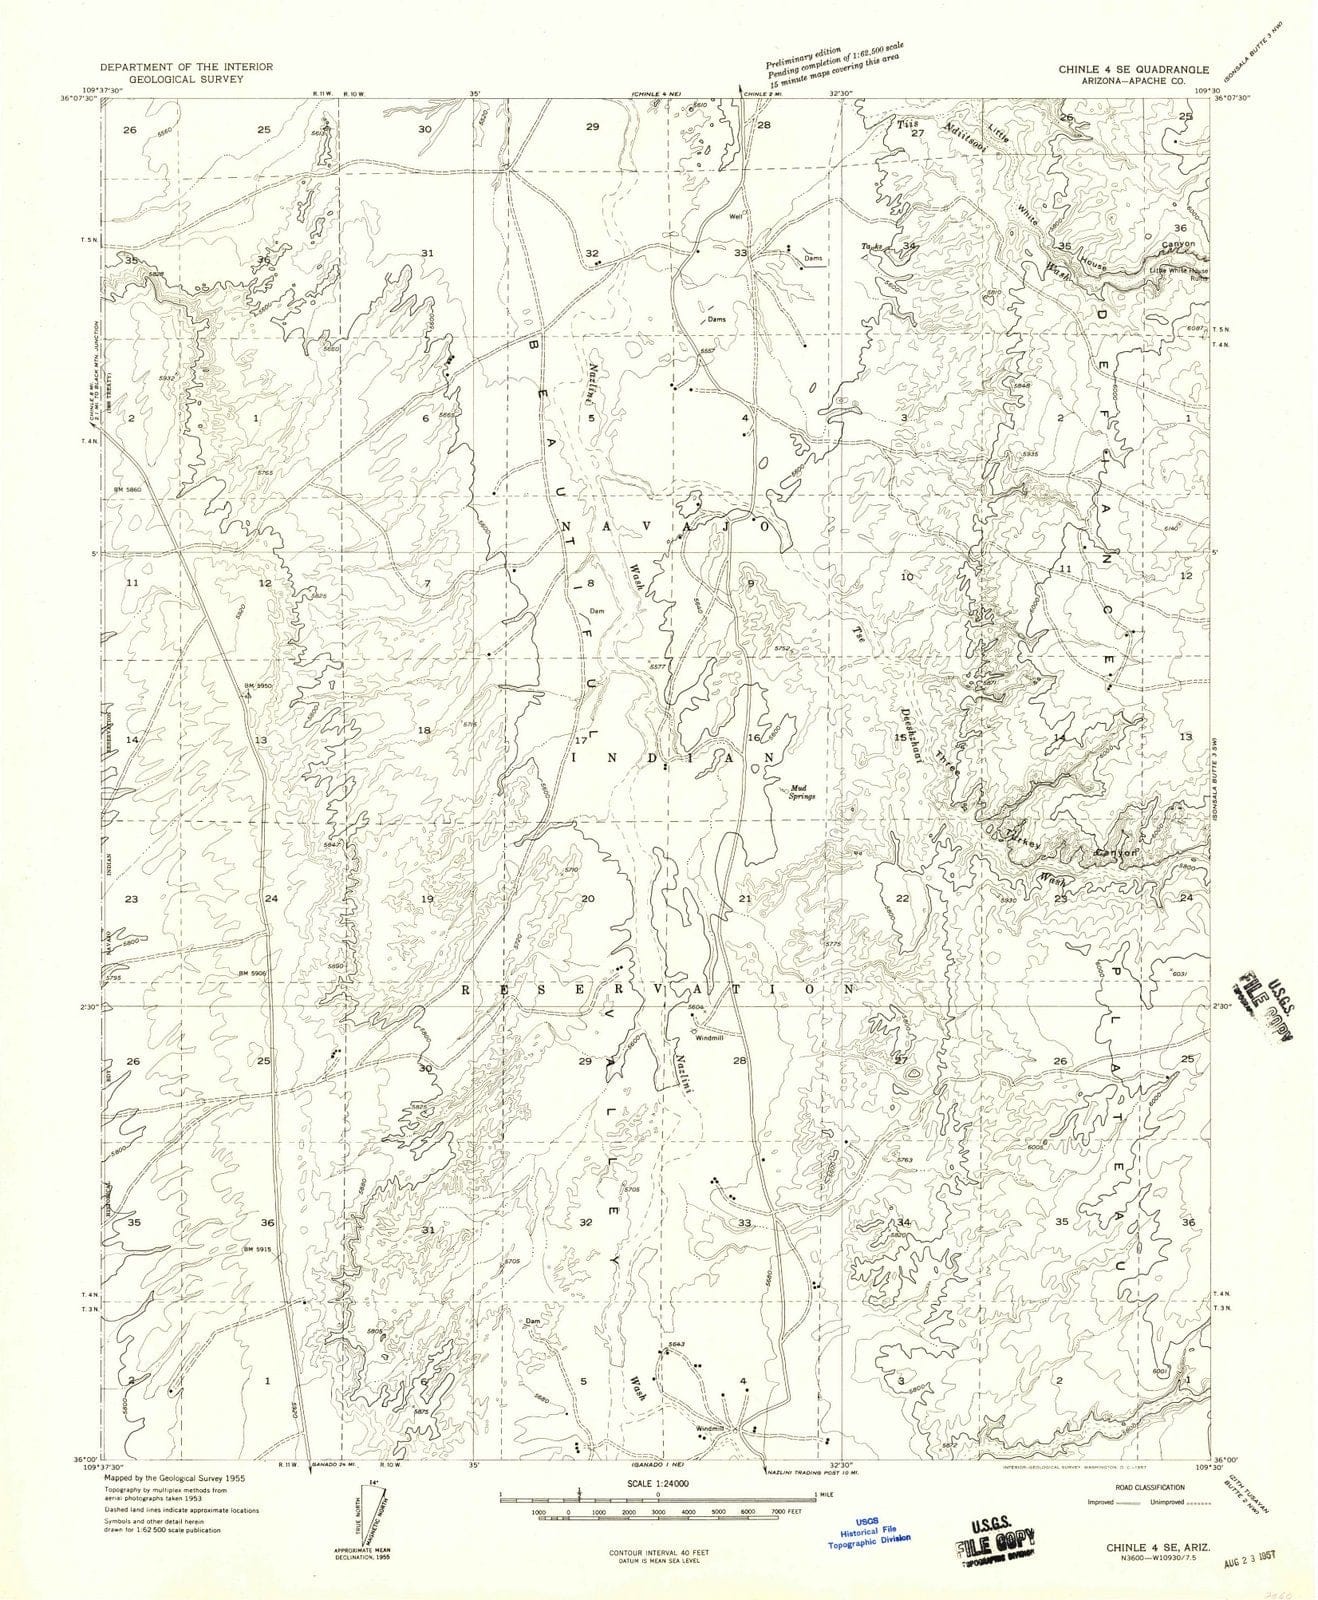 1955 Chinle 4, AZ - Arizona - USGS Topographic Map v2